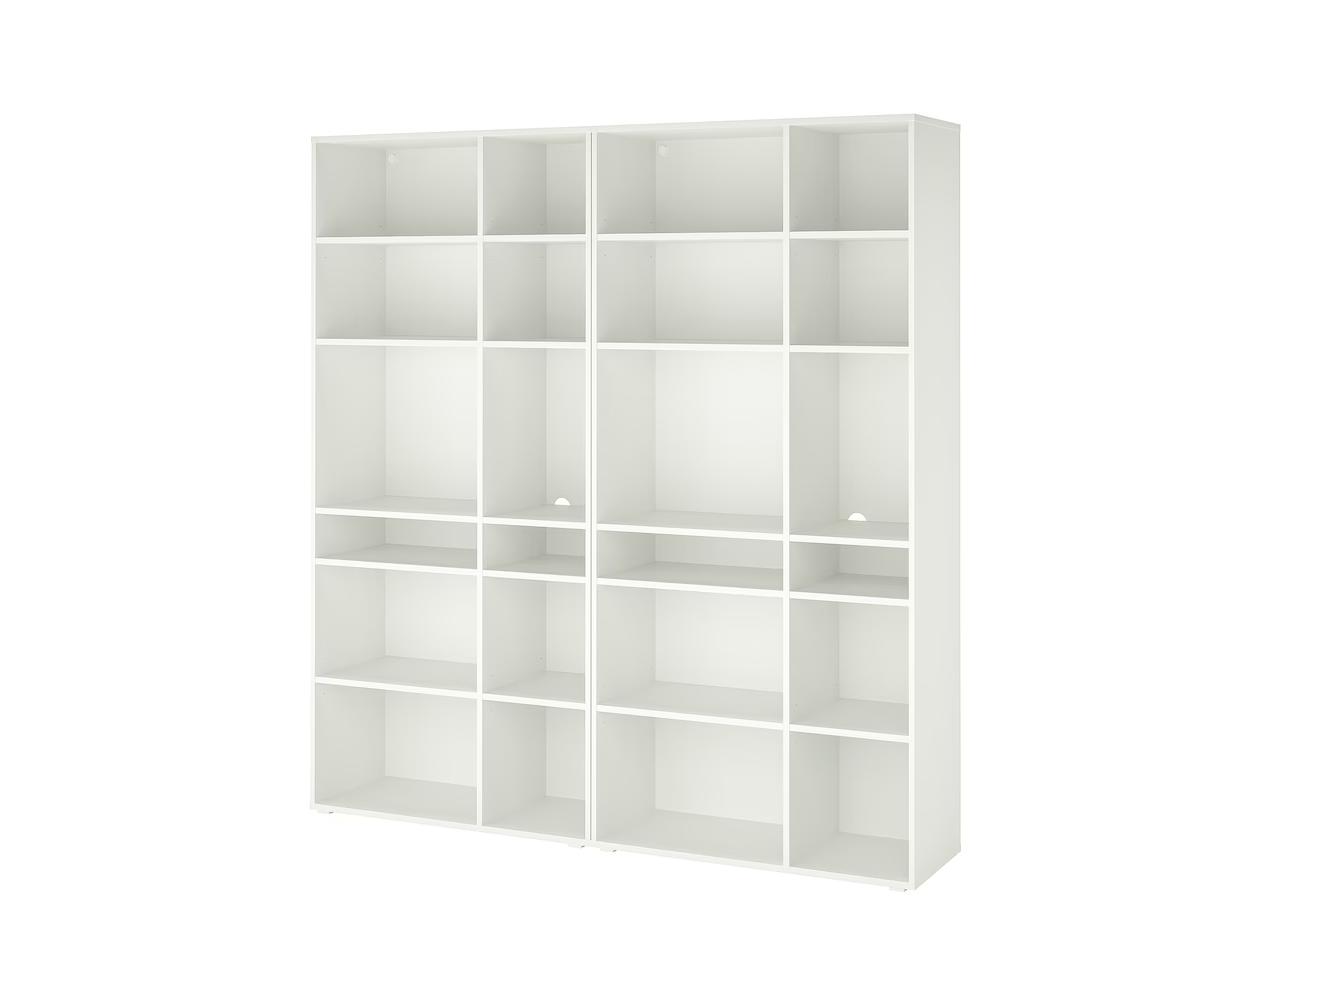 Изображение товара Стеллаж Вихалс 1 white ИКЕА (IKEA), 190x37x200 см на сайте adeta.ru